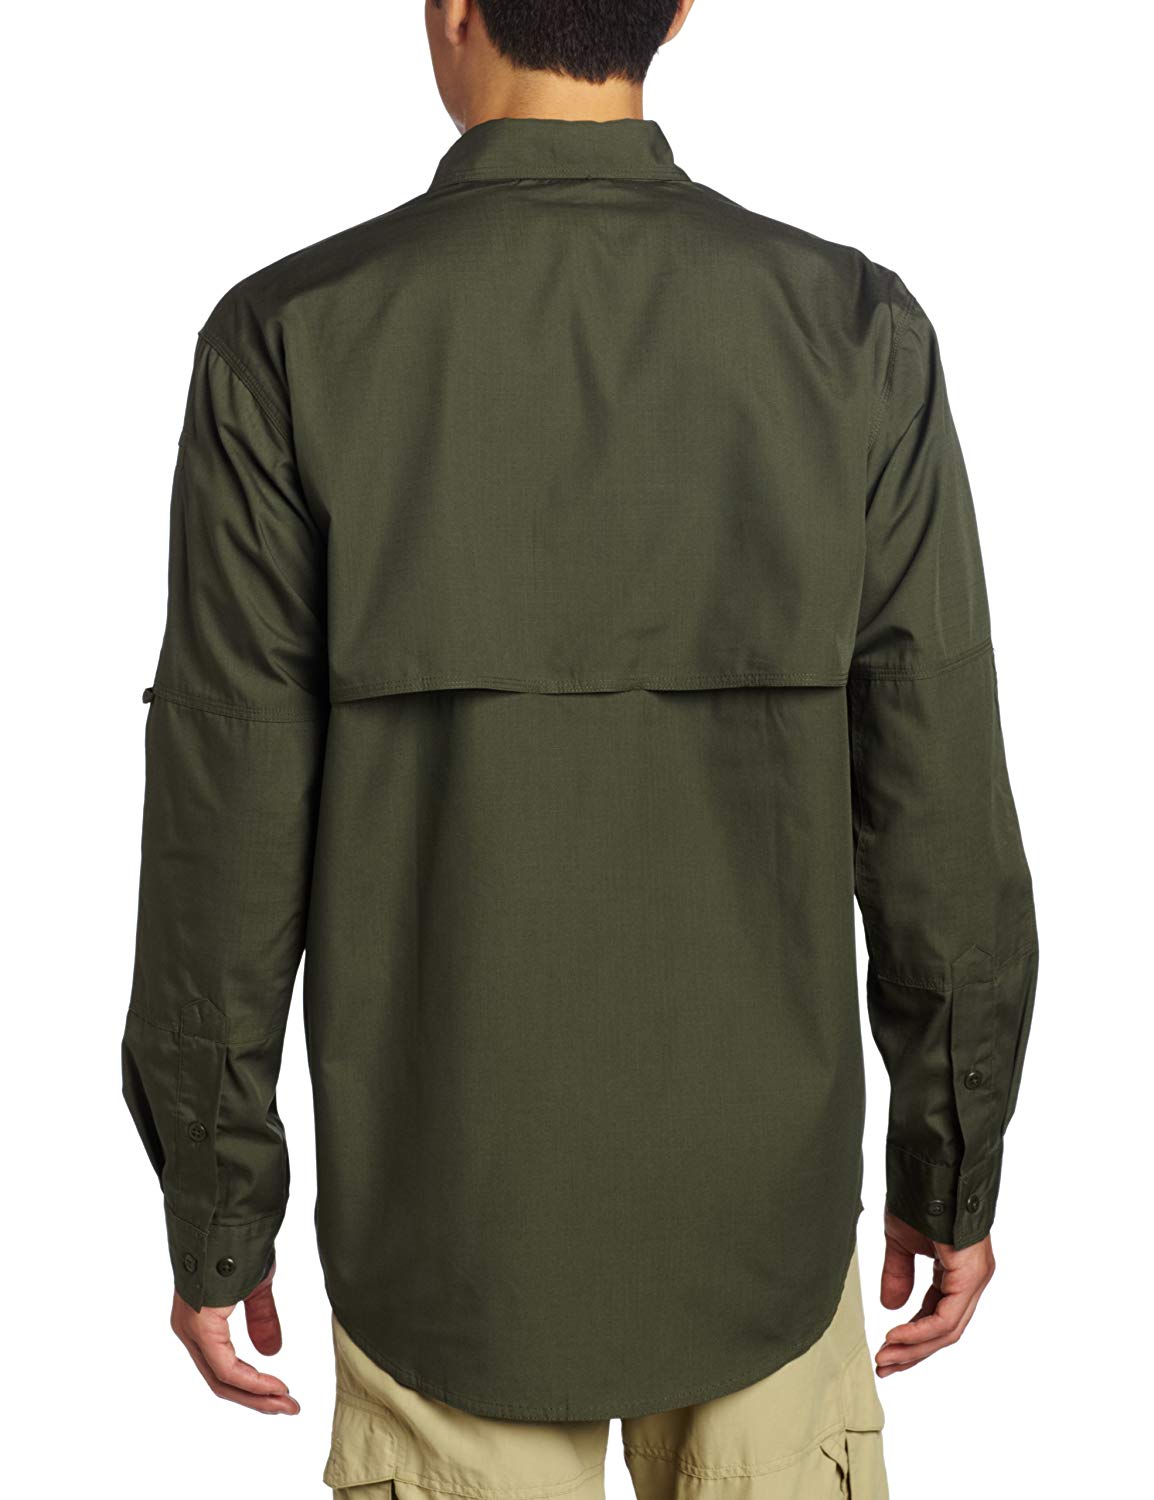 5.11 Tactical TacLite Professional Long Sleeve Shirt 72175 5.11 Tactical ktmart 8